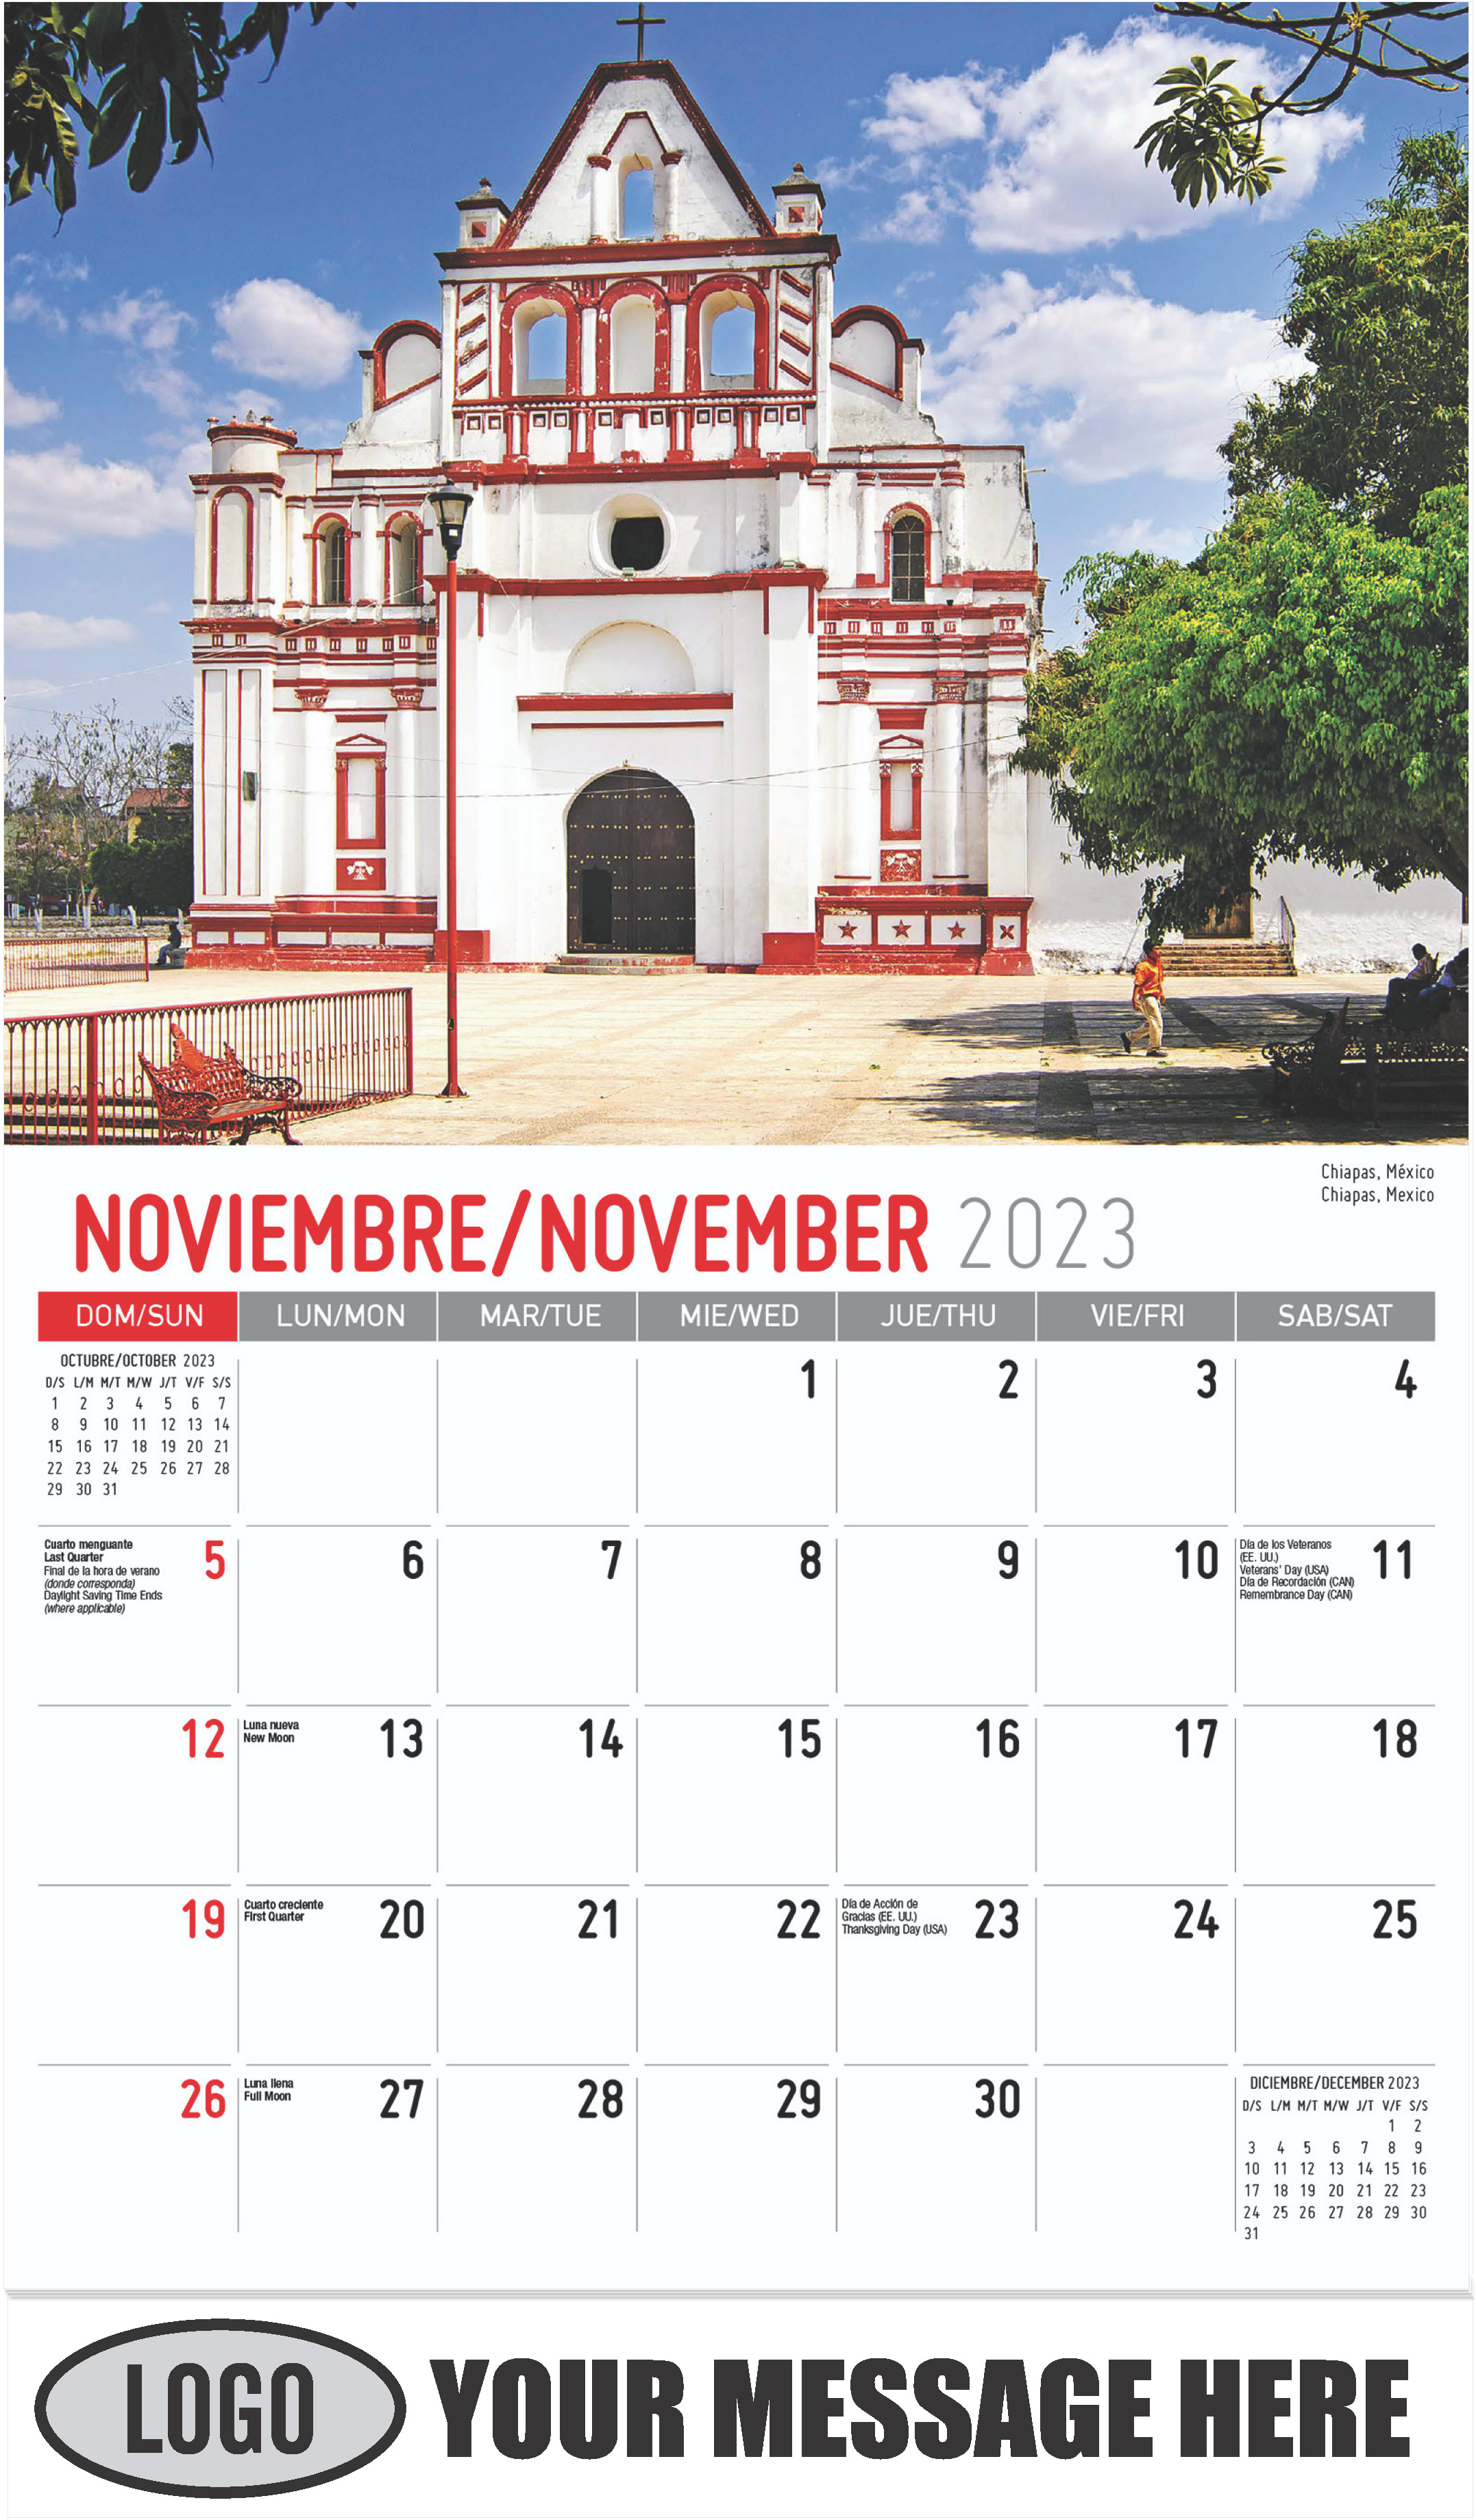 Chiapas, Mexico - November - Beauty of Latin America 2023 Promotional Calendar